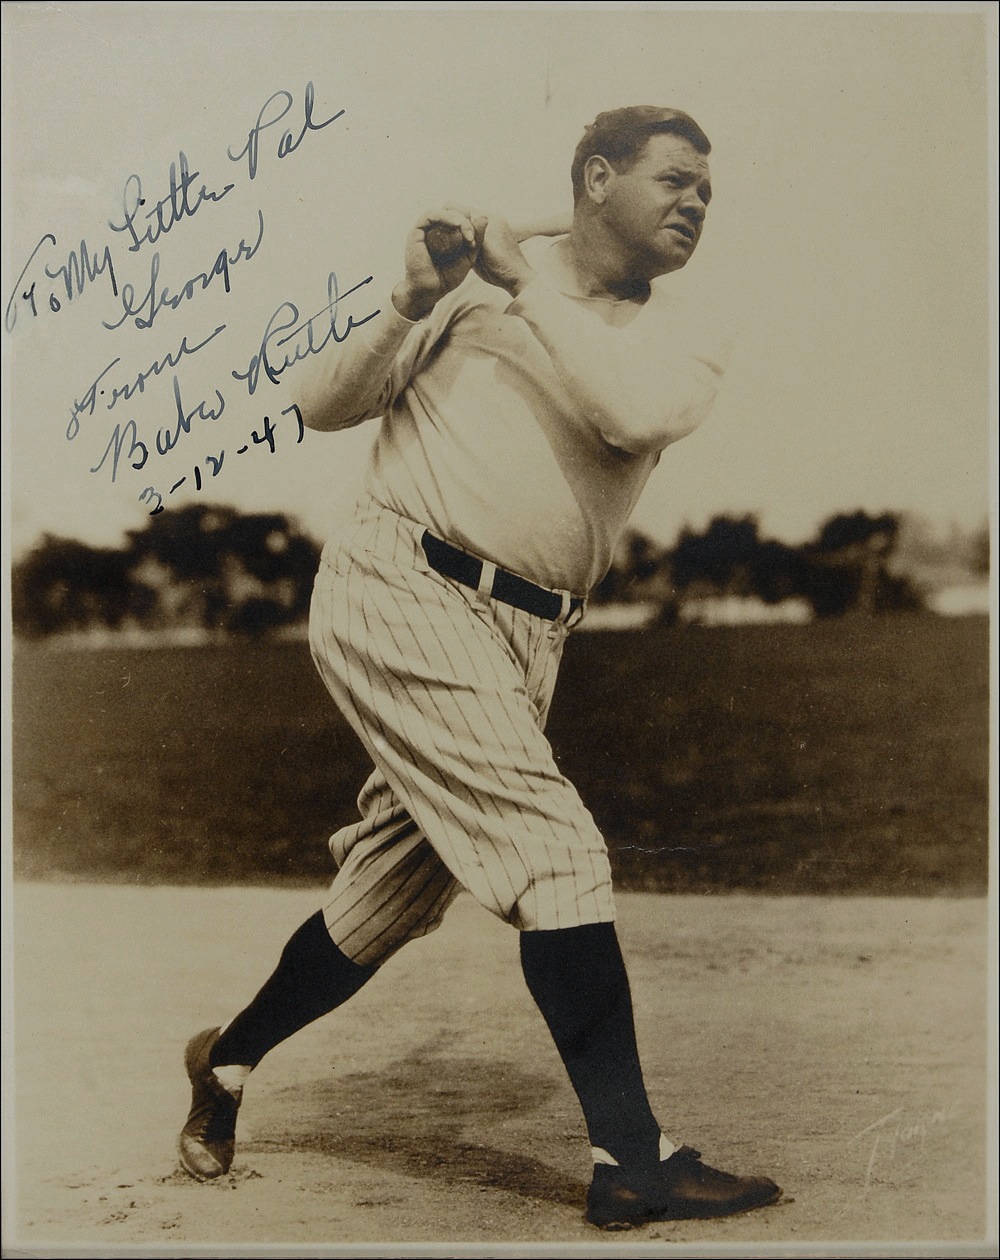 Sell Babe Ruth memorabilia, baseballs, autographs: RR Auction